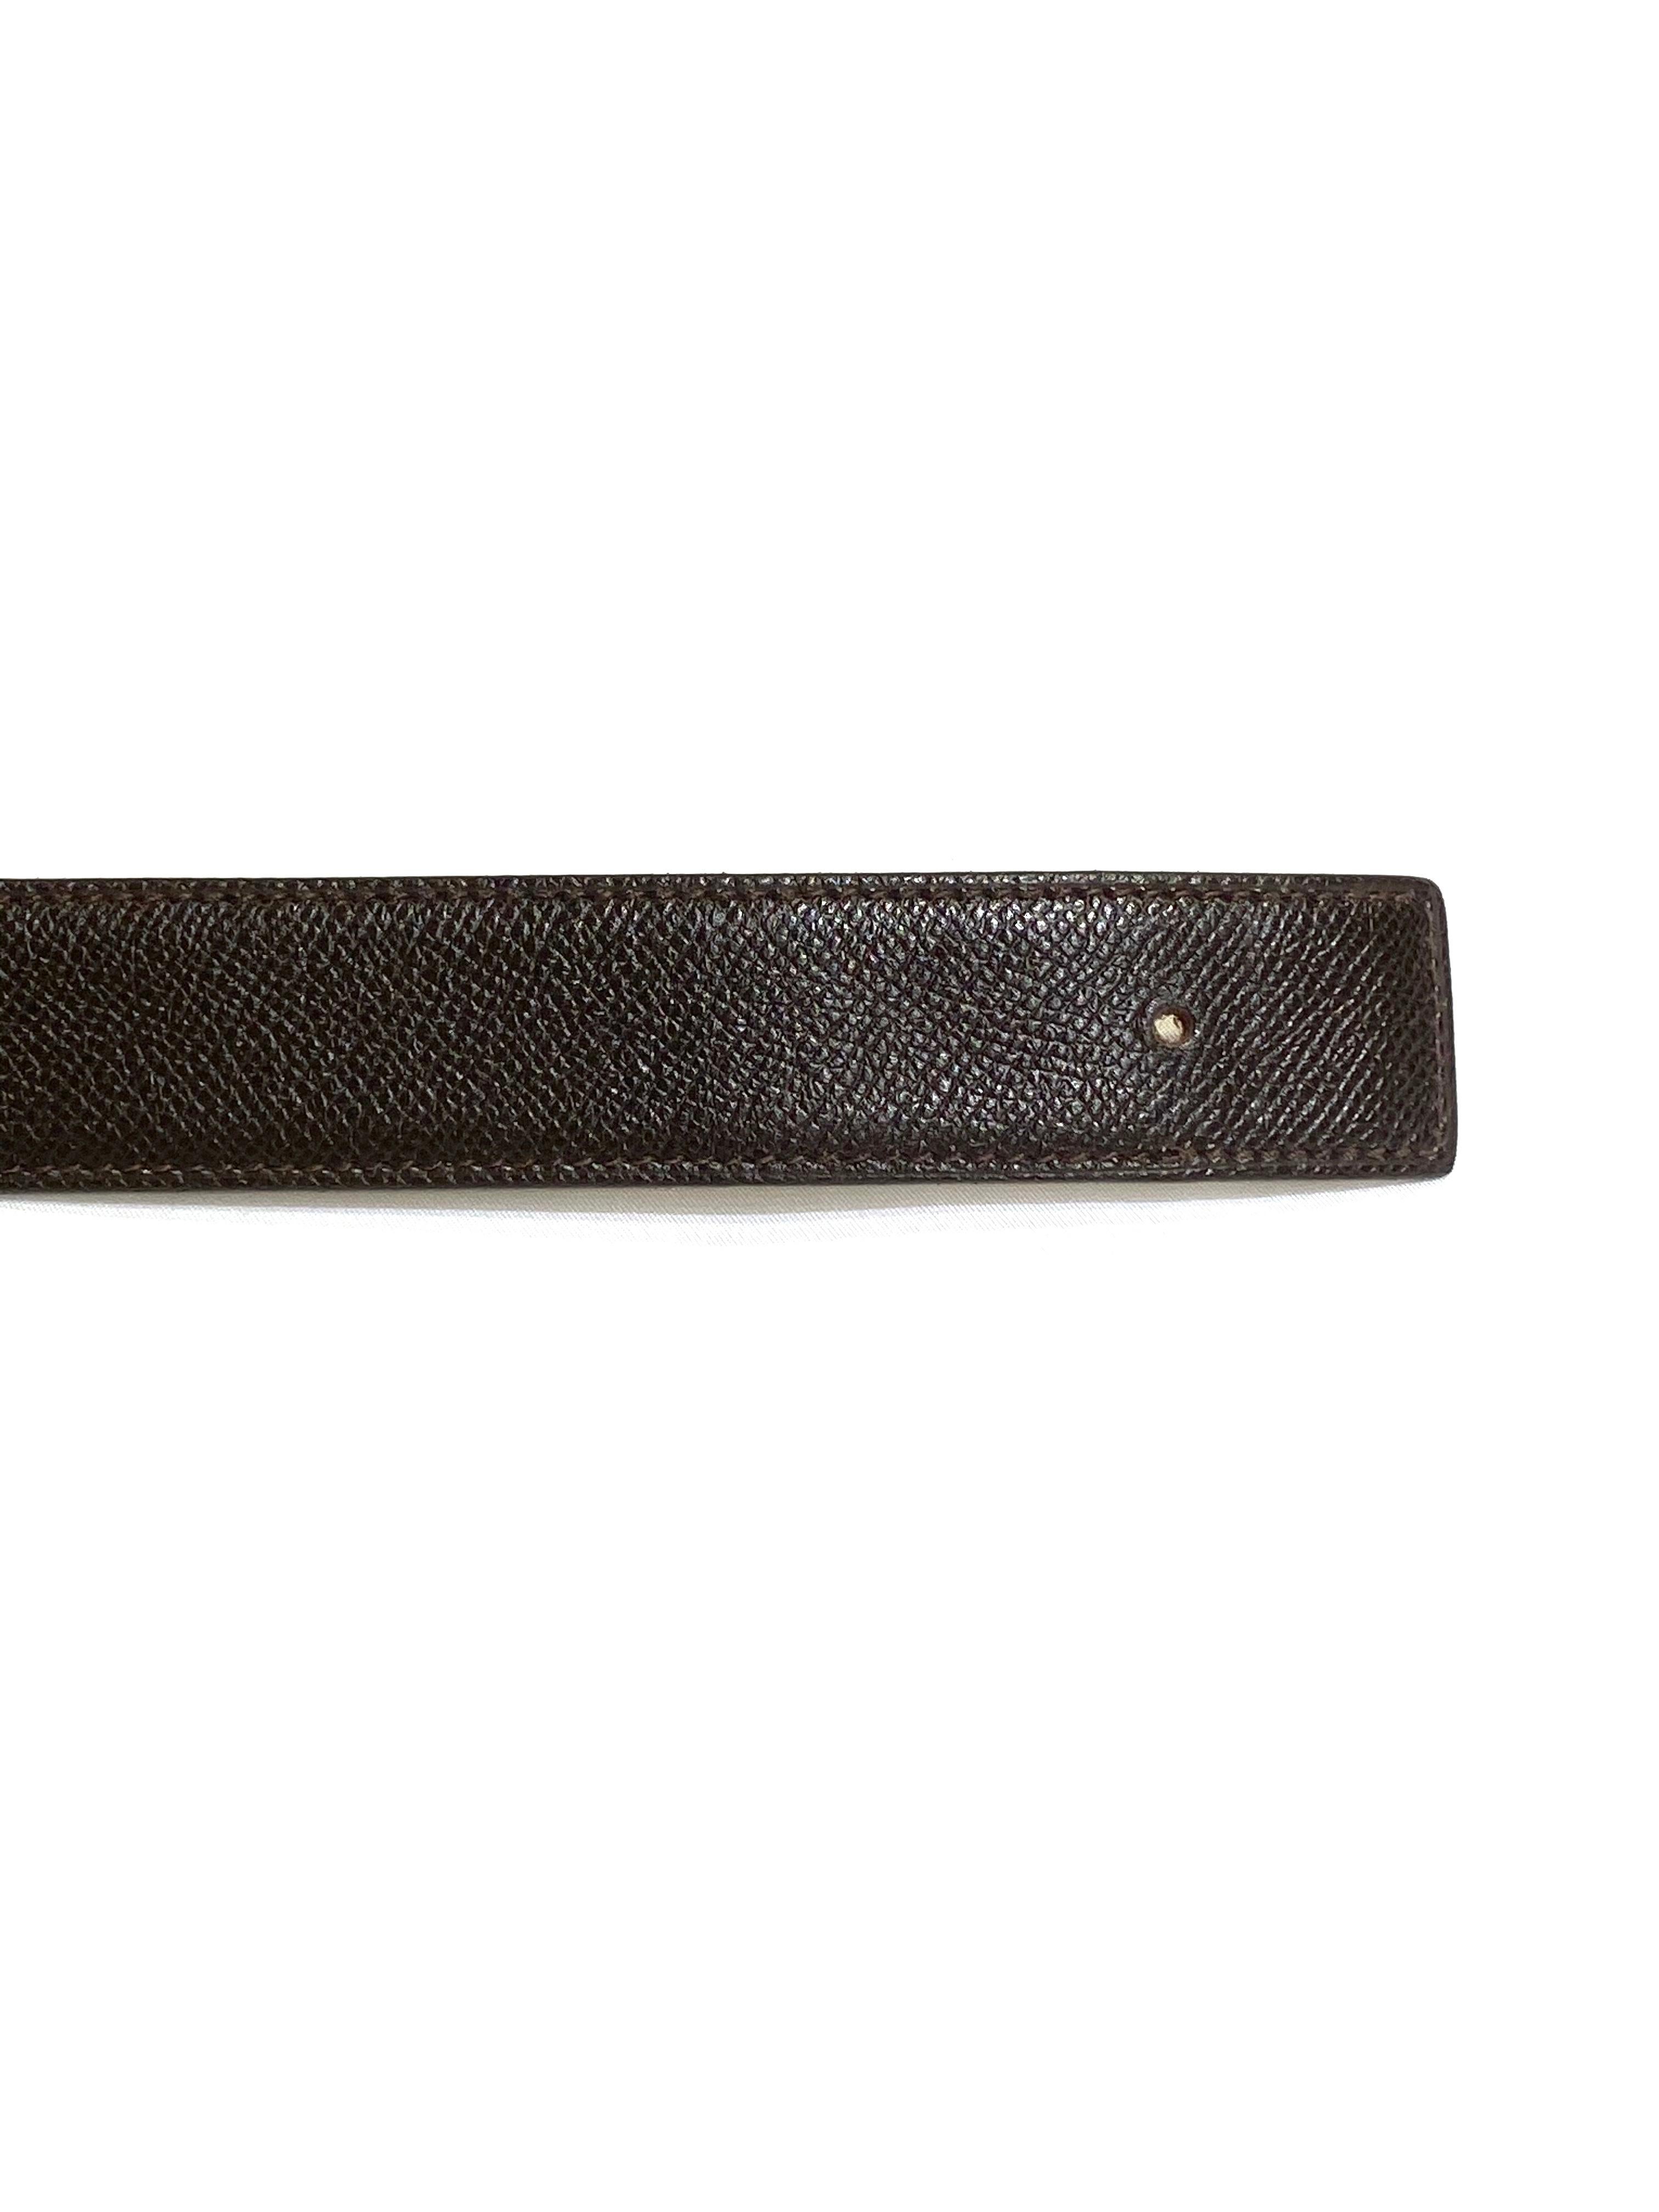 Black Hermes Paris Brown Leather Strap Belt 